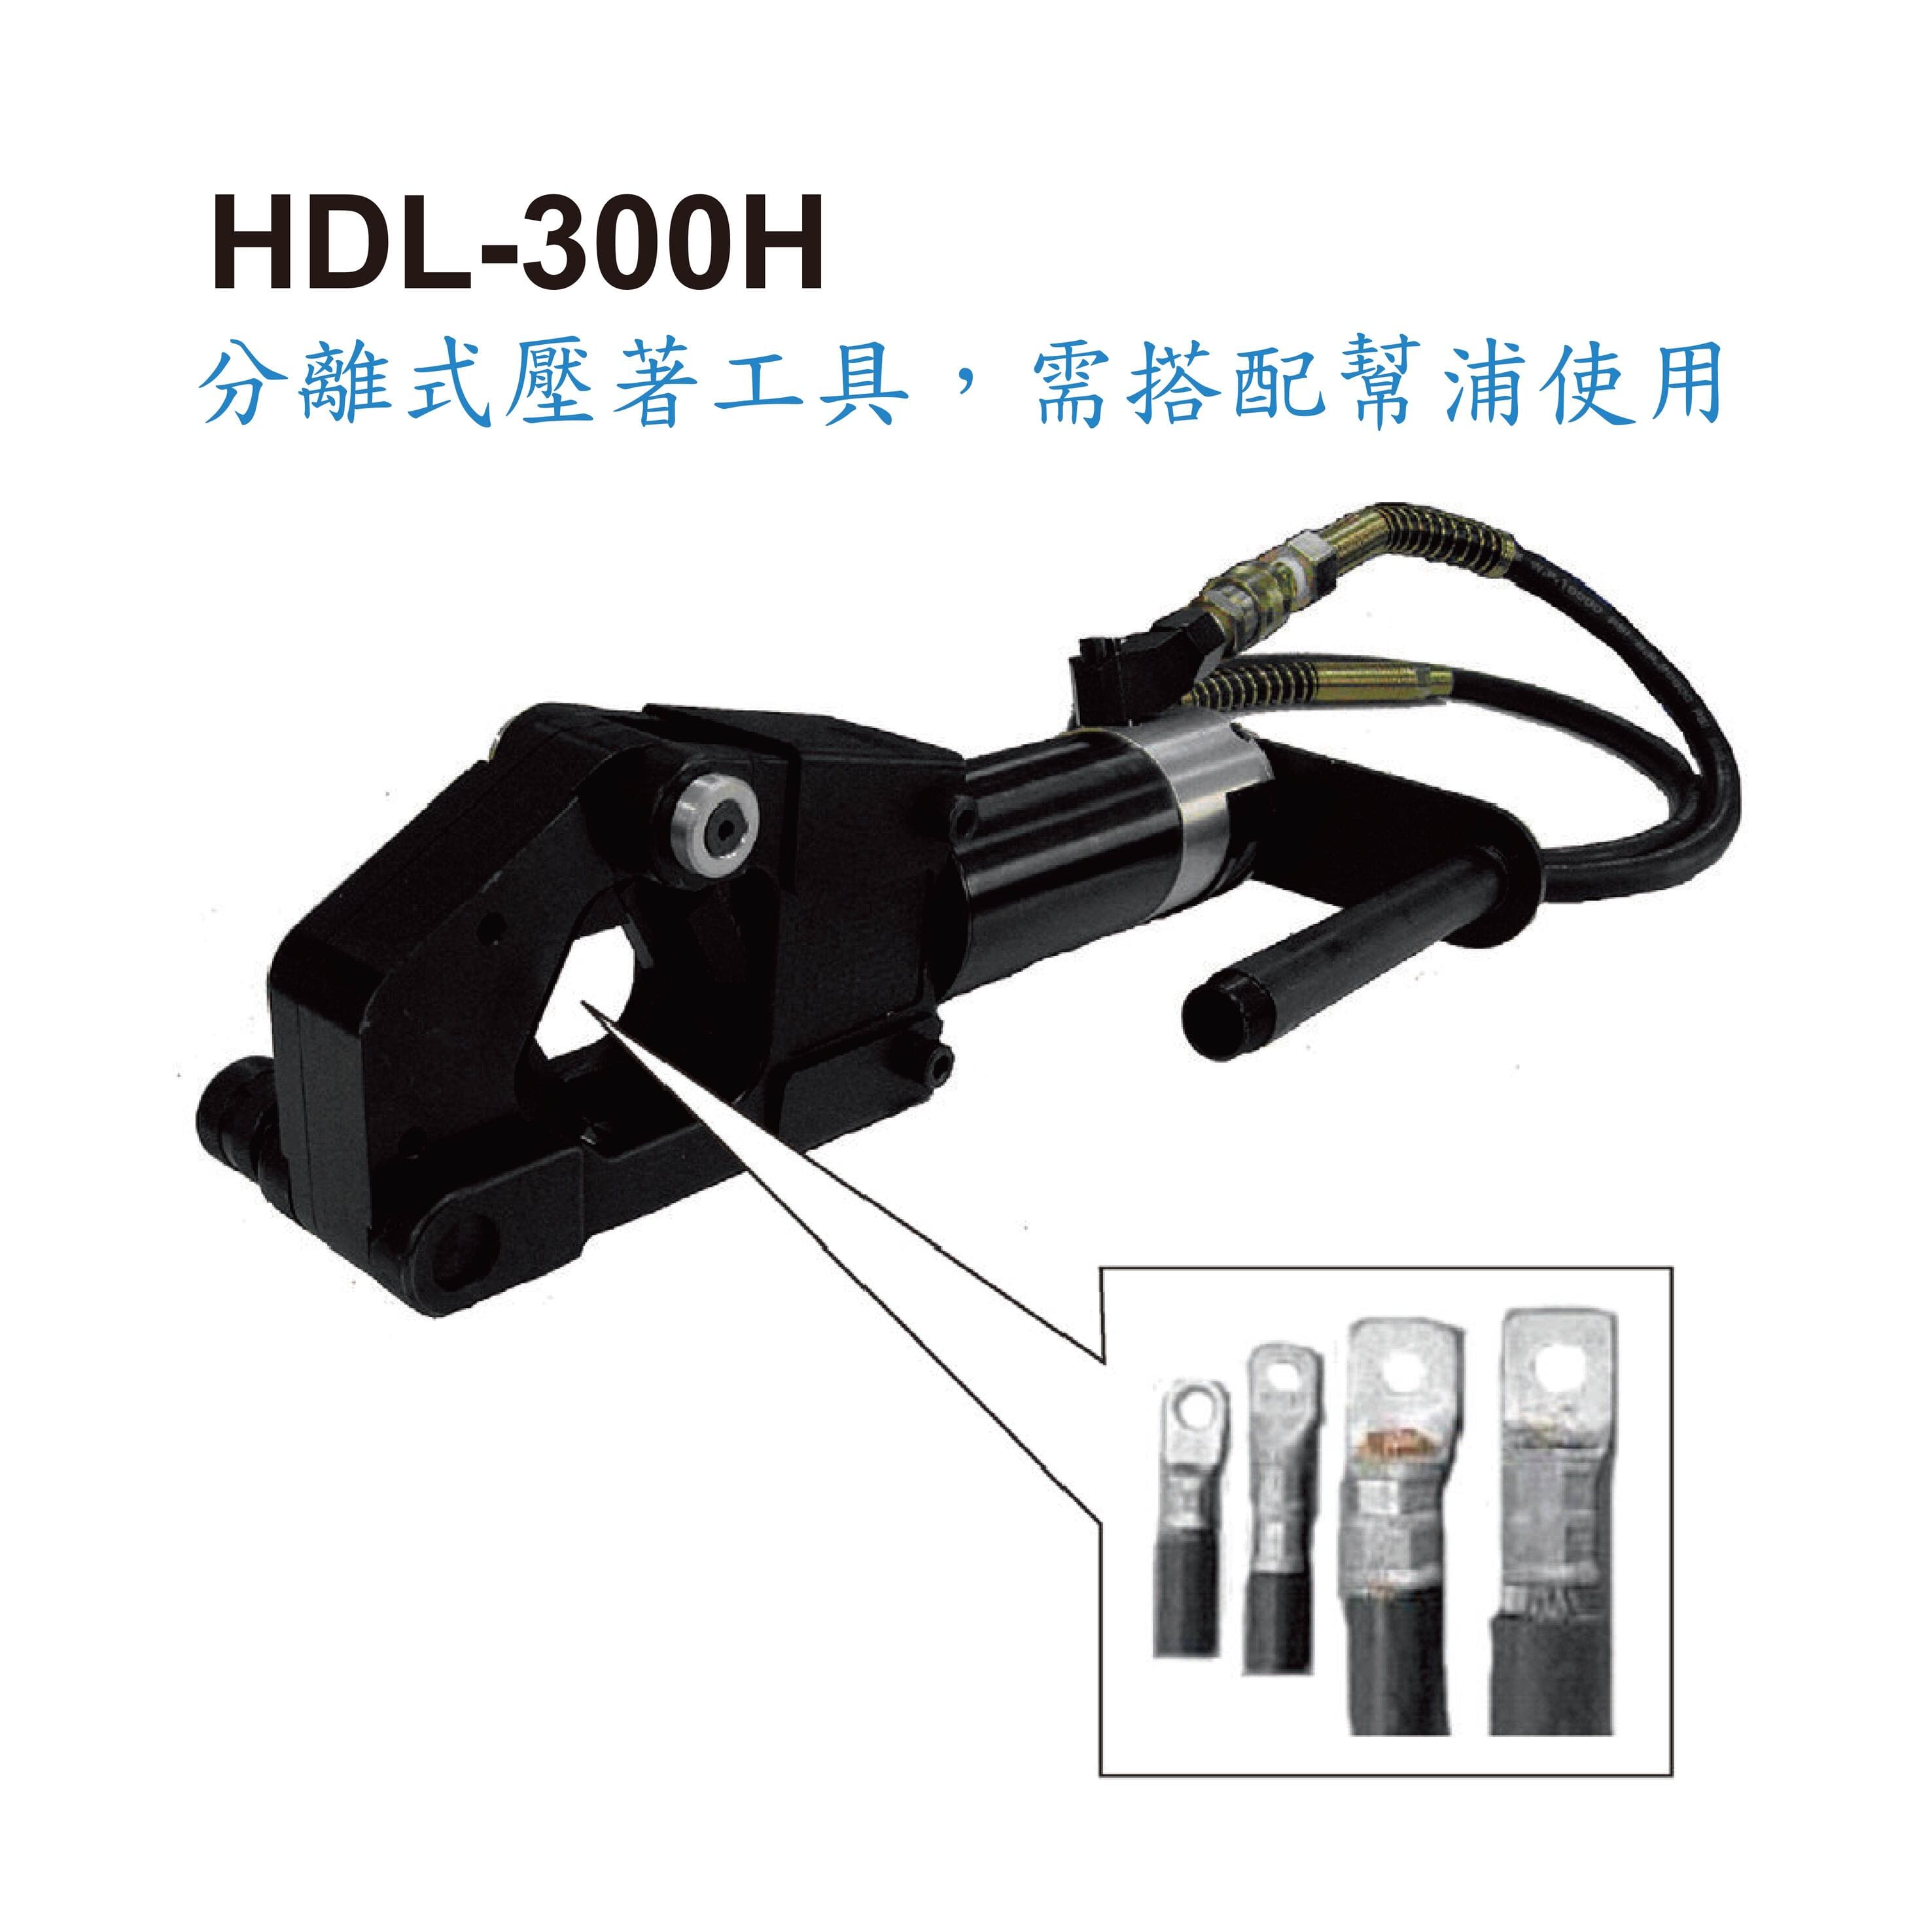 HDL-300H 免換模油壓壓接工具-HDL-300H 